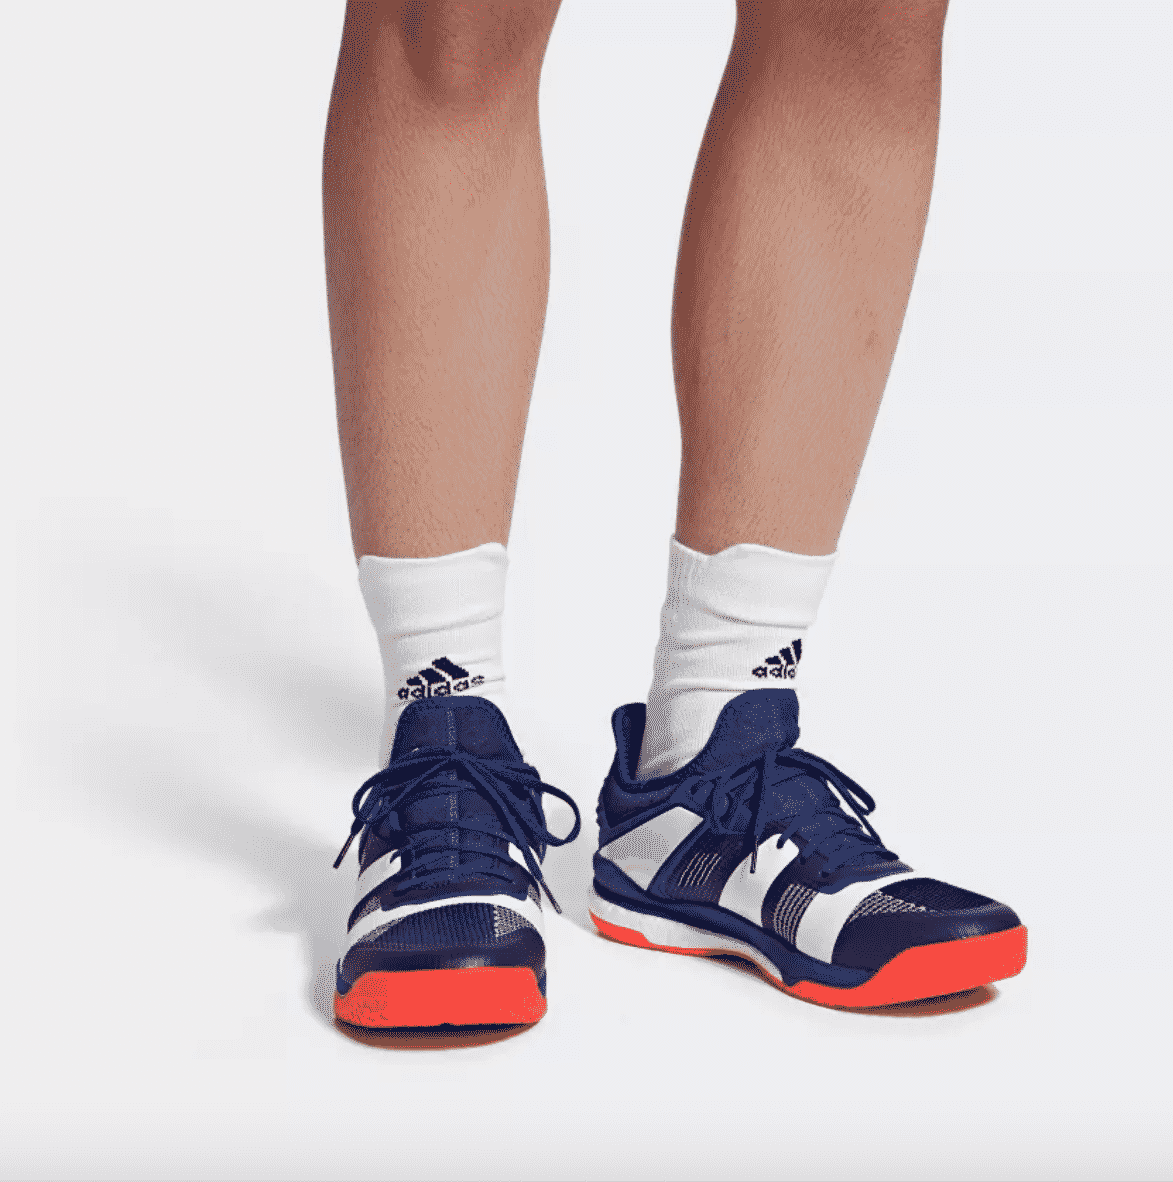 chaussure handball adidas stabil x